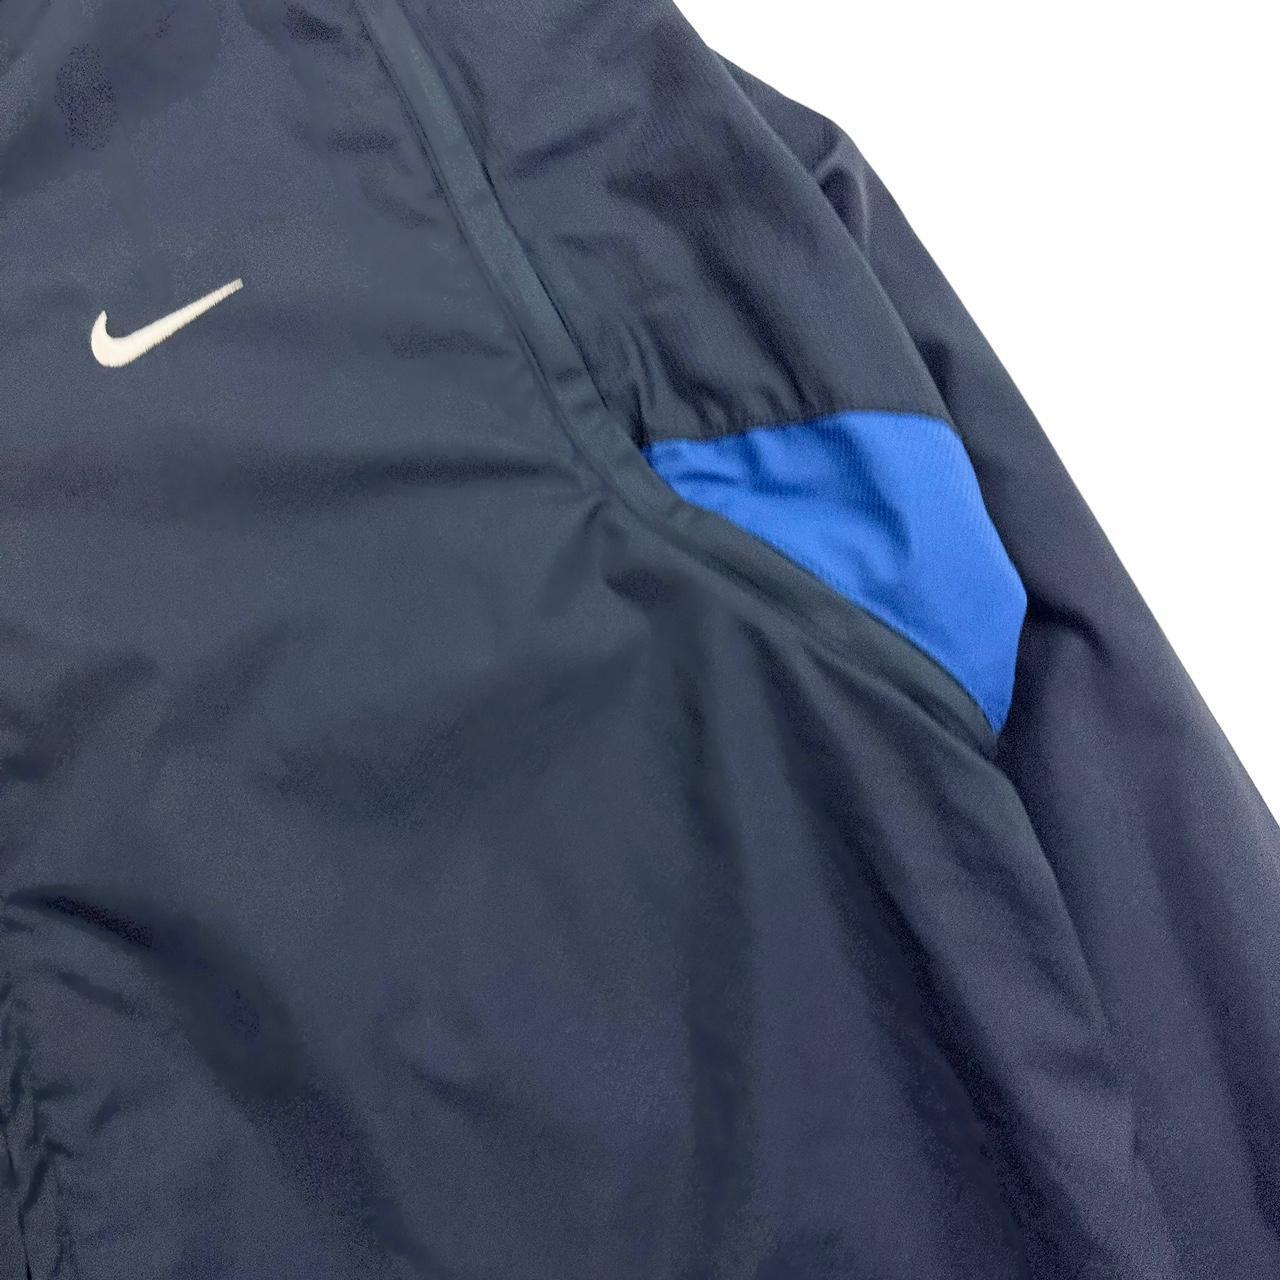 Vintage Nike Ventilation jacket size S - Known Source